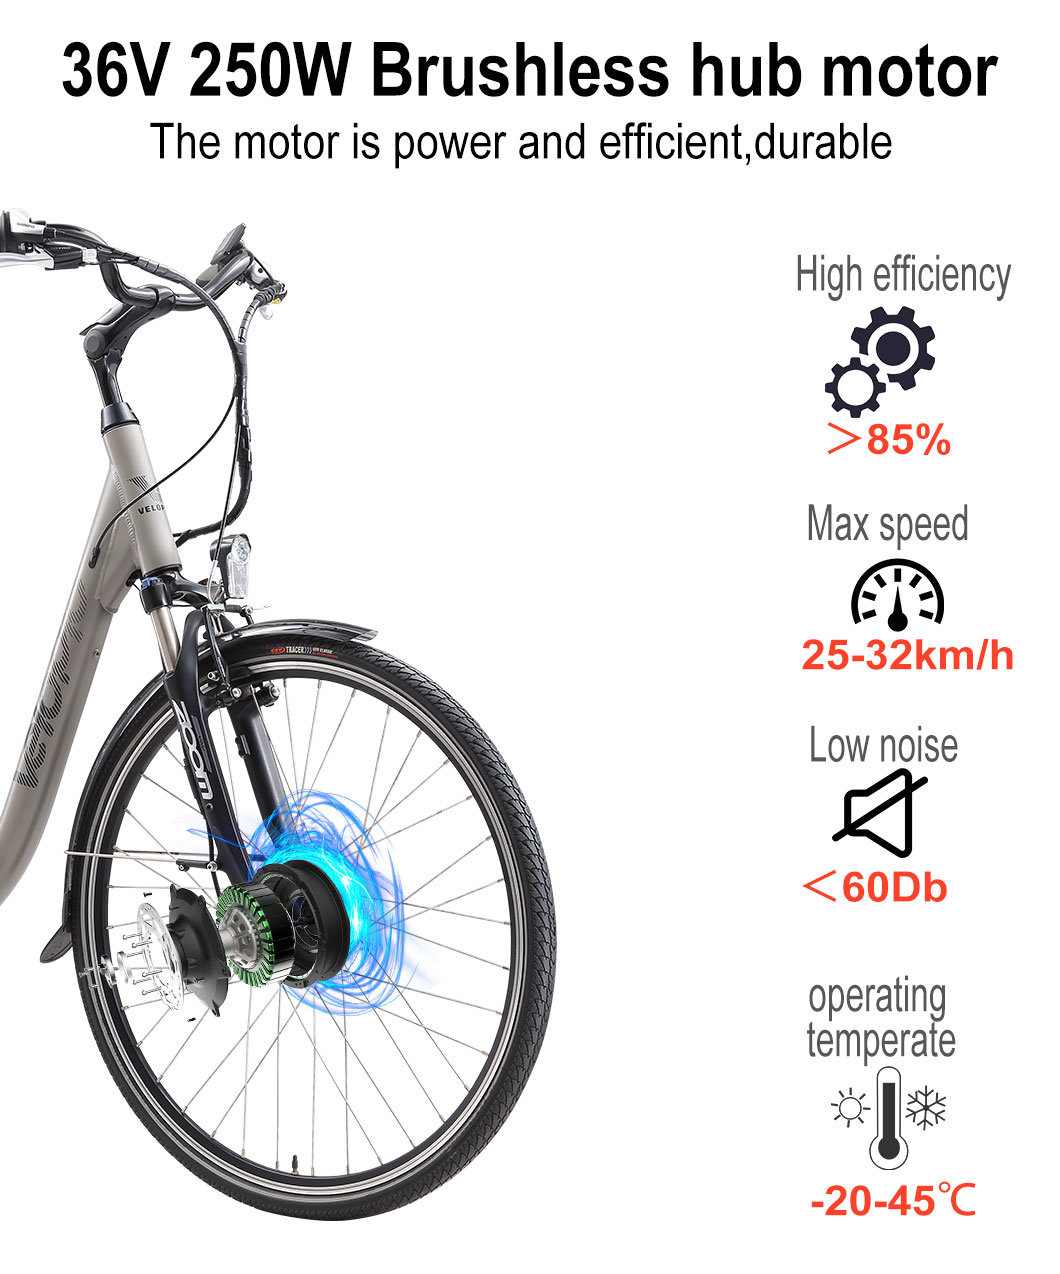 Step Thru 500W Removable Battery Rear Motor Electric City Bike